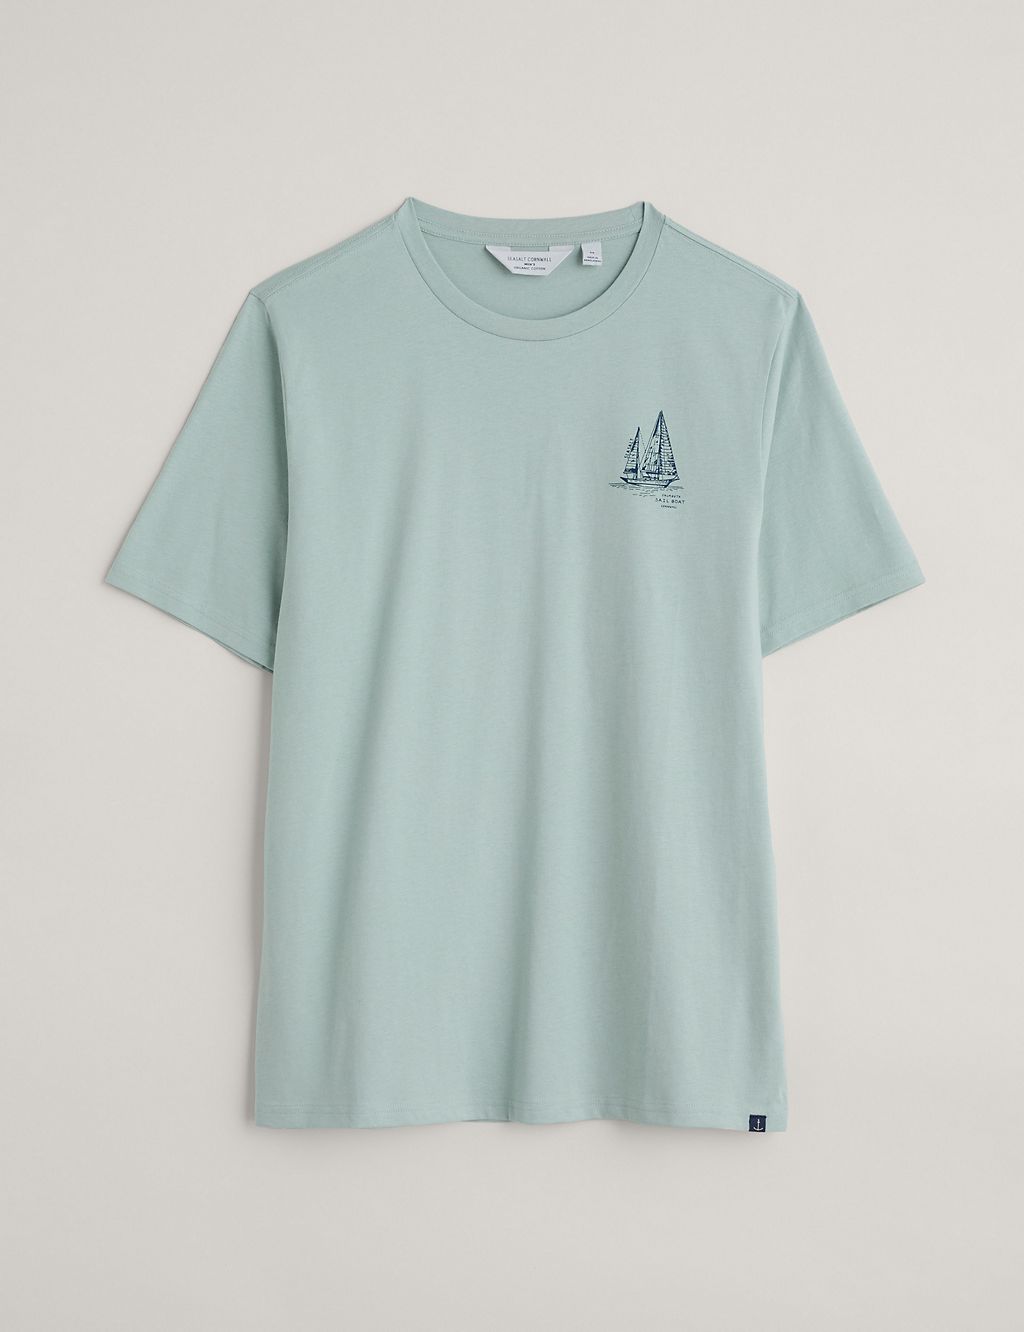 Organic Cotton Boat Graphic T-Shirt 1 of 5